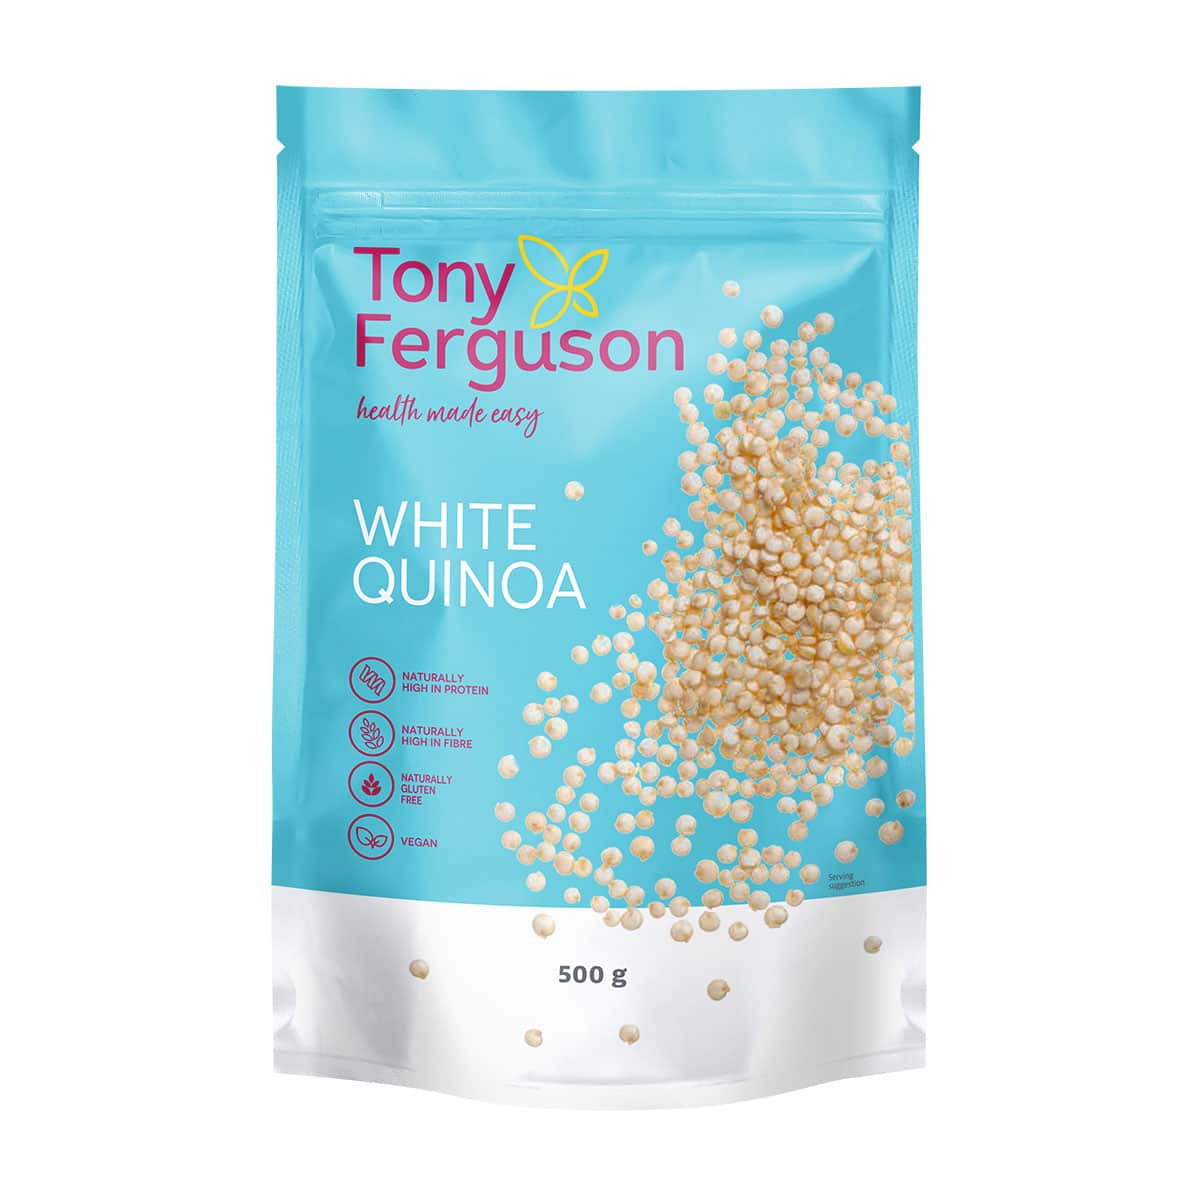 Tony Ferguson White Quinoa - 500g